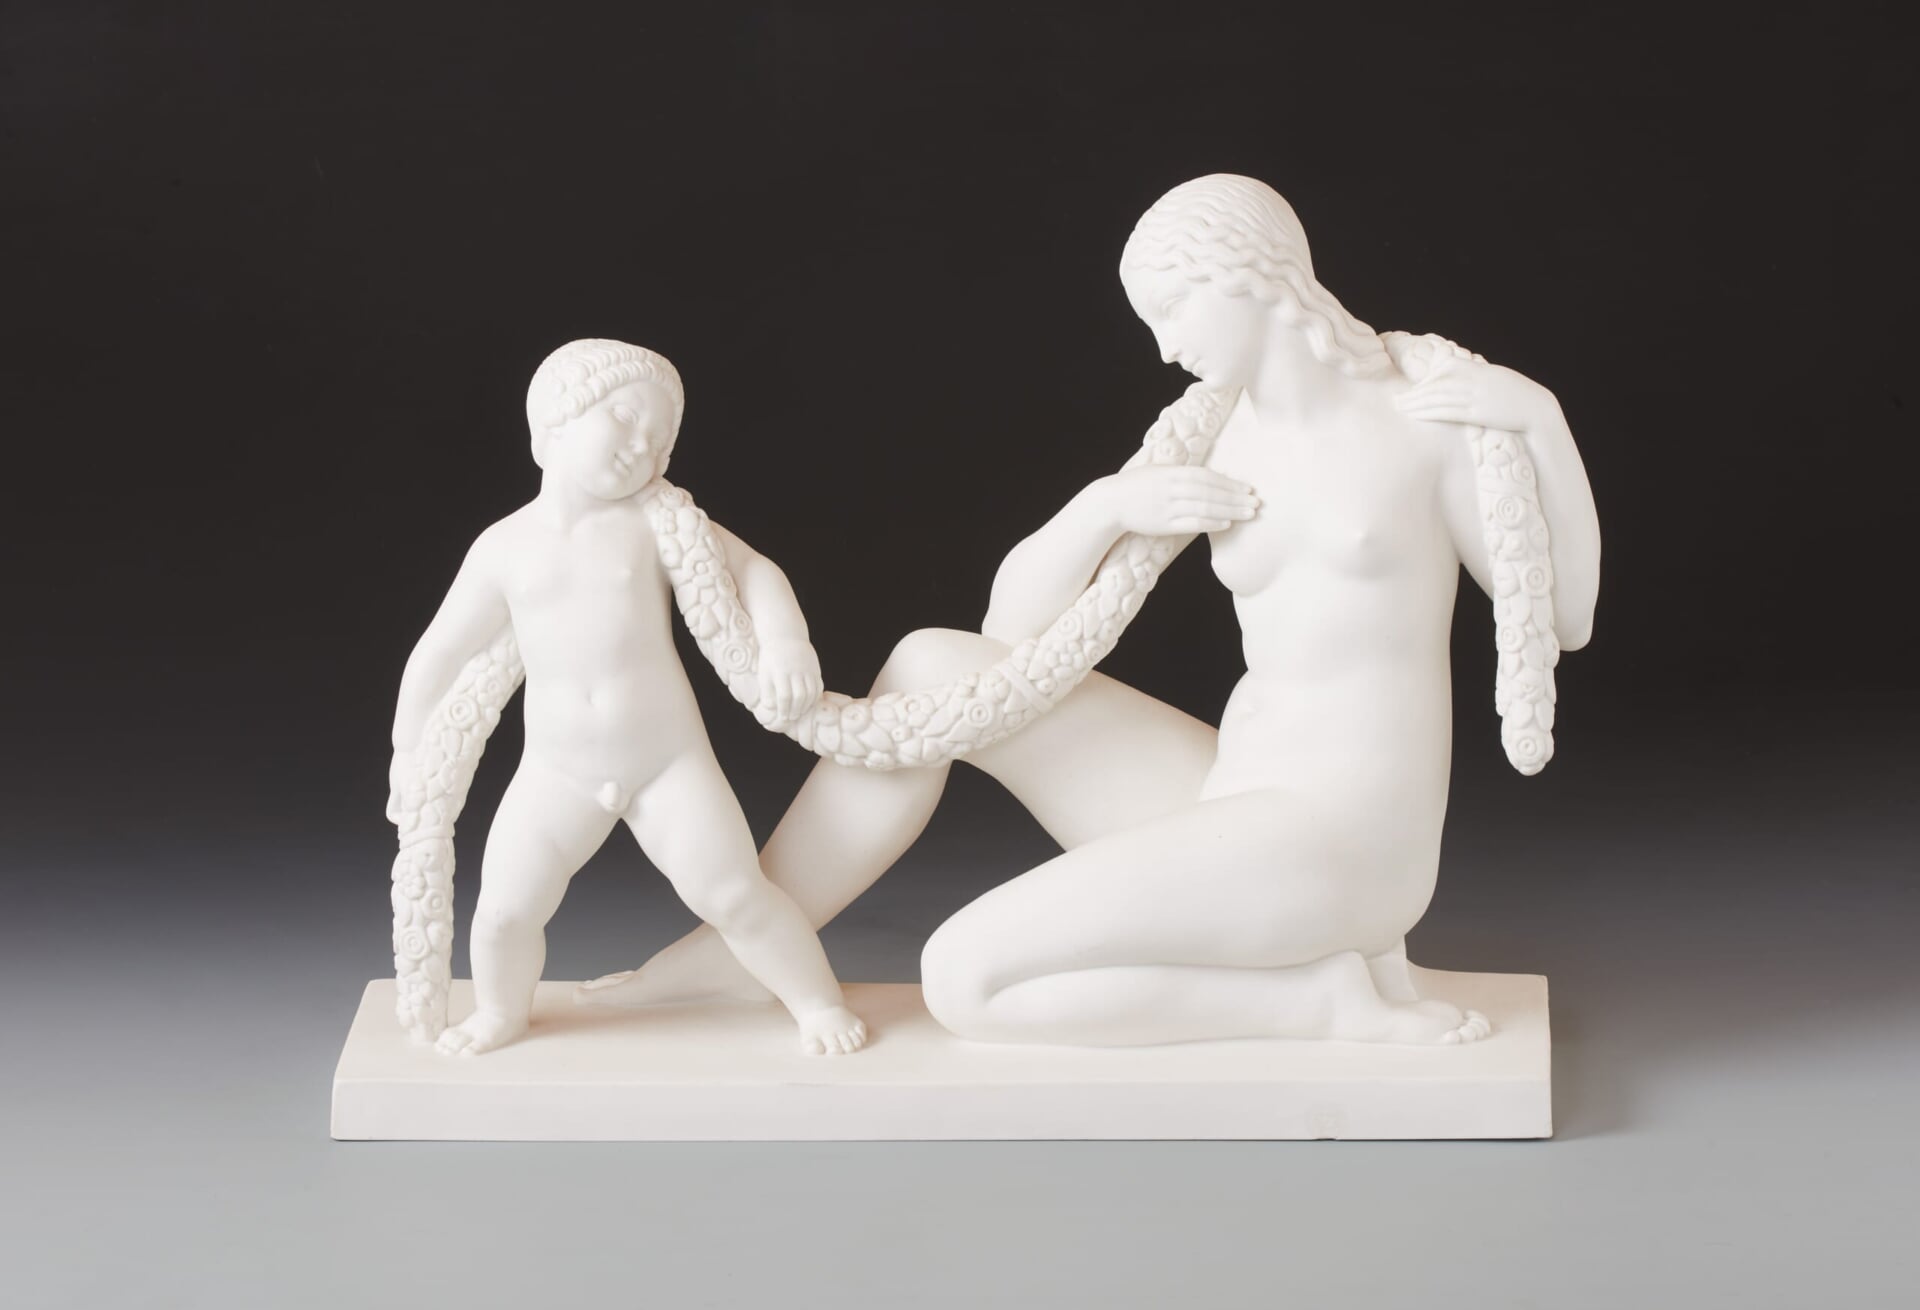 modeler: Joseph Jules Emmanuel CORMIER, manufactory: Sèvres manufactory, Woman and Child, 1931. Collection of Tokyo Metropolitan Teien Art Museum